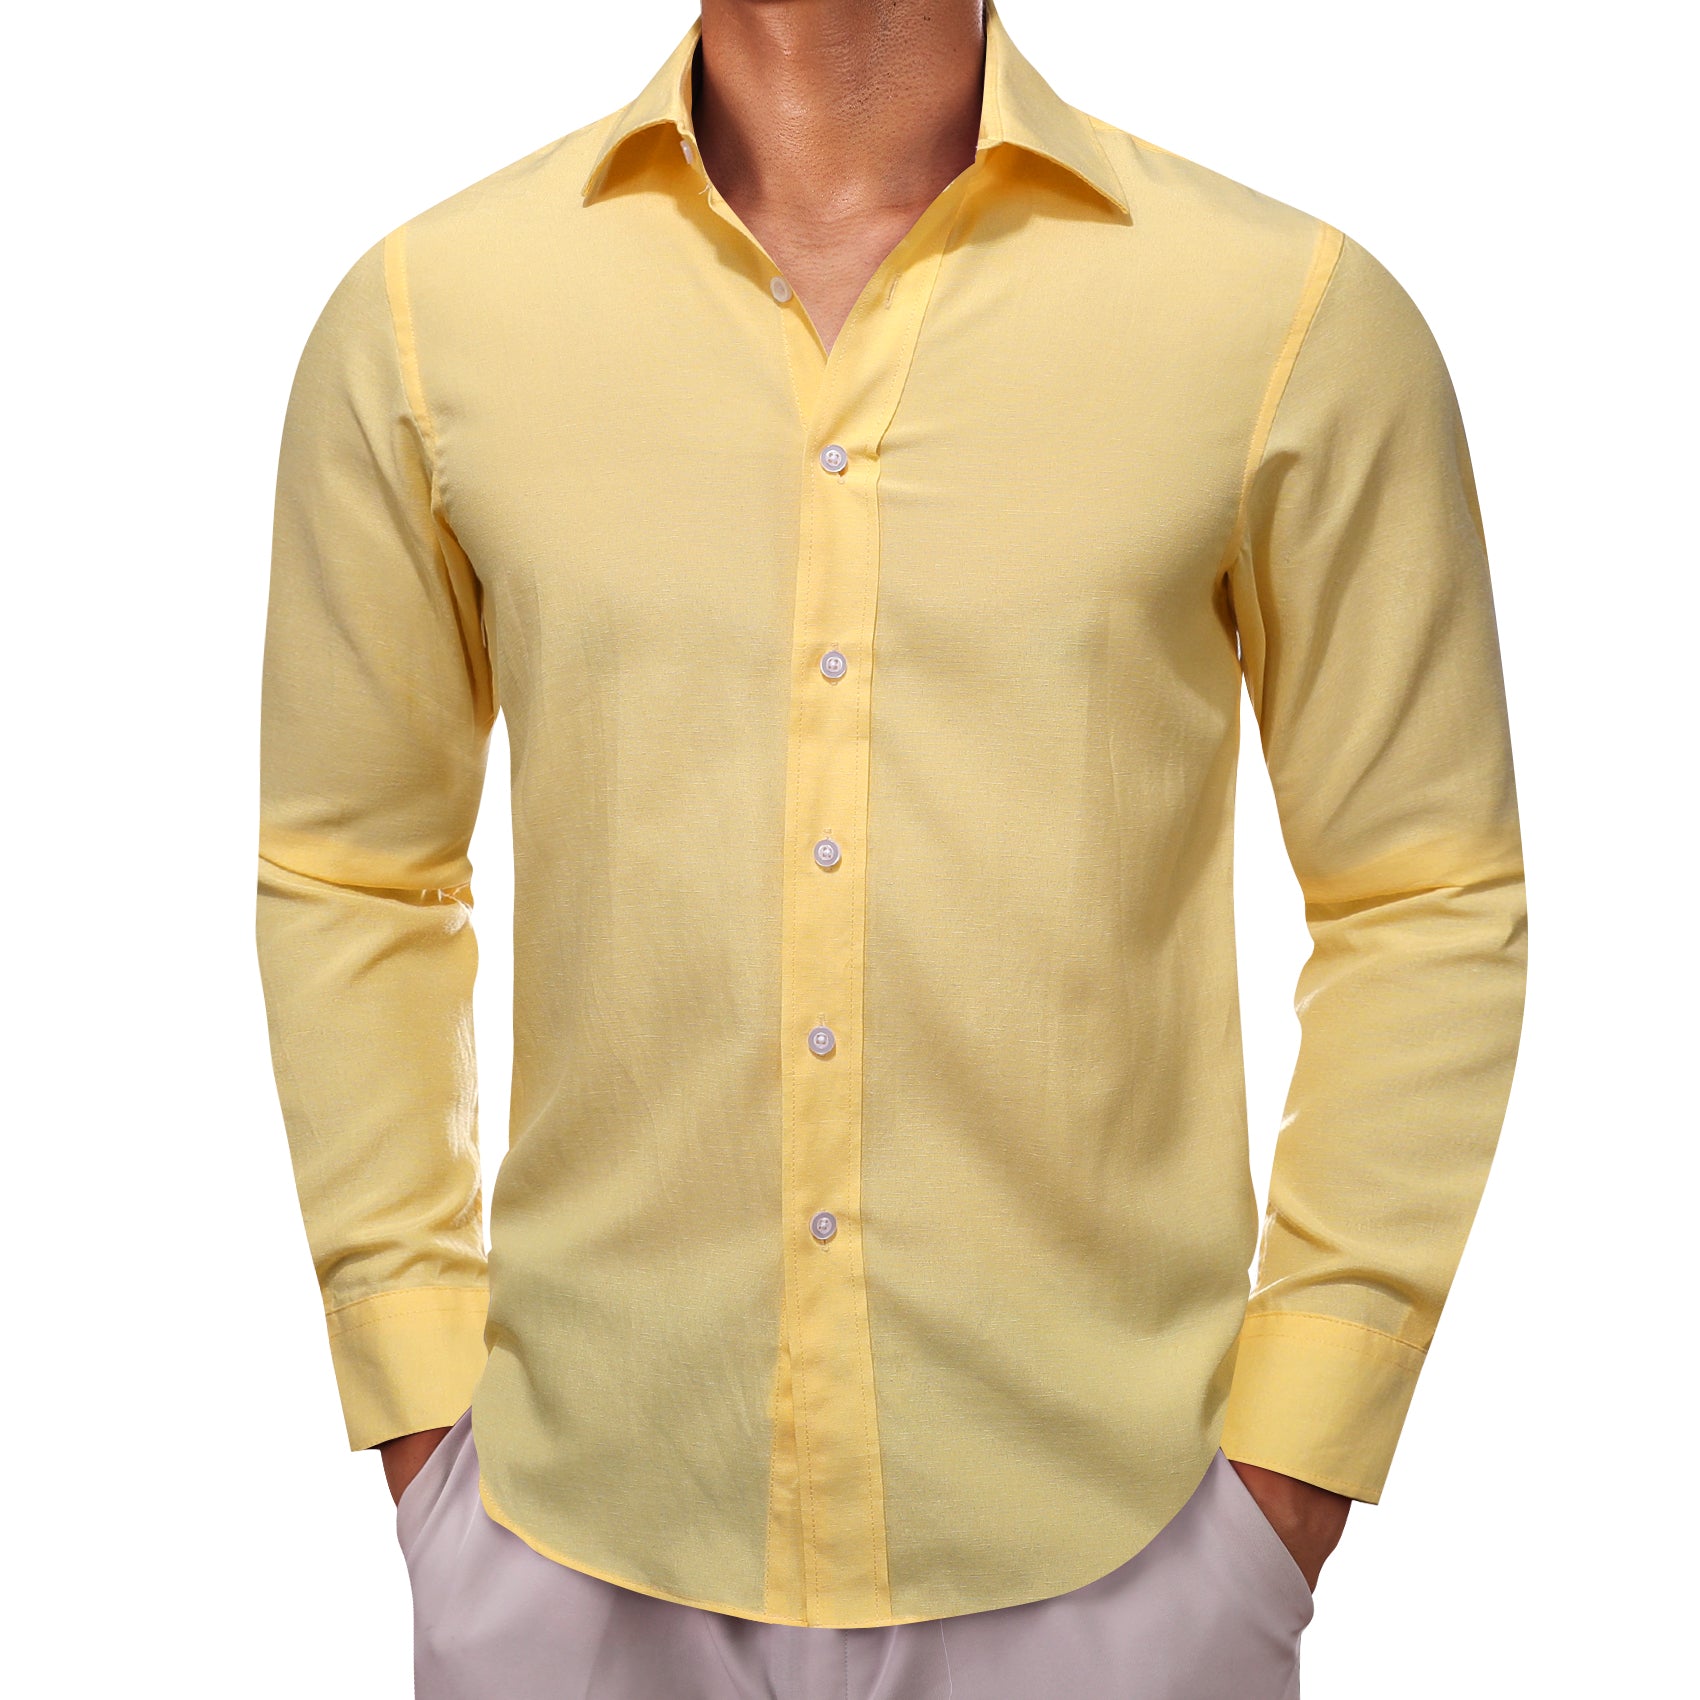 Barry.wang Narcissus Solid Silk Shirt